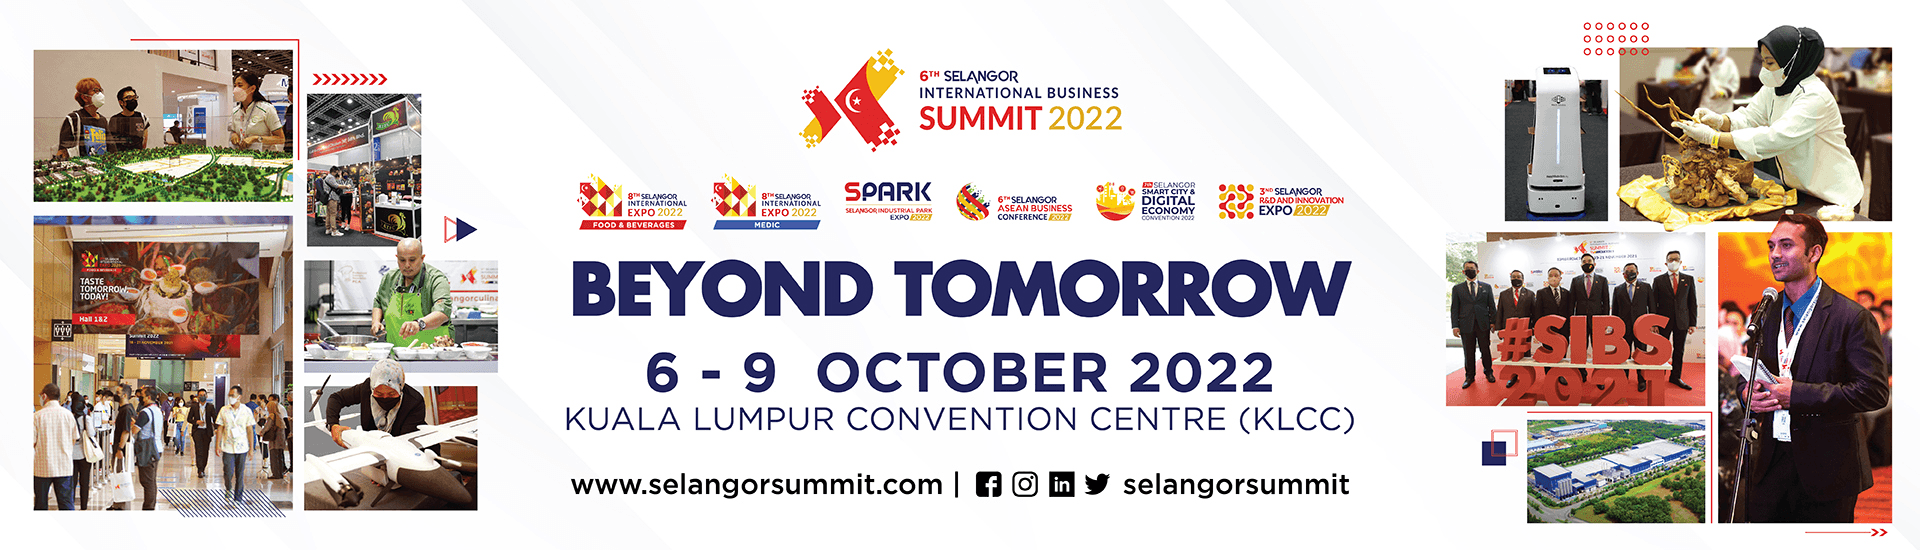 Selangor Summit 2022